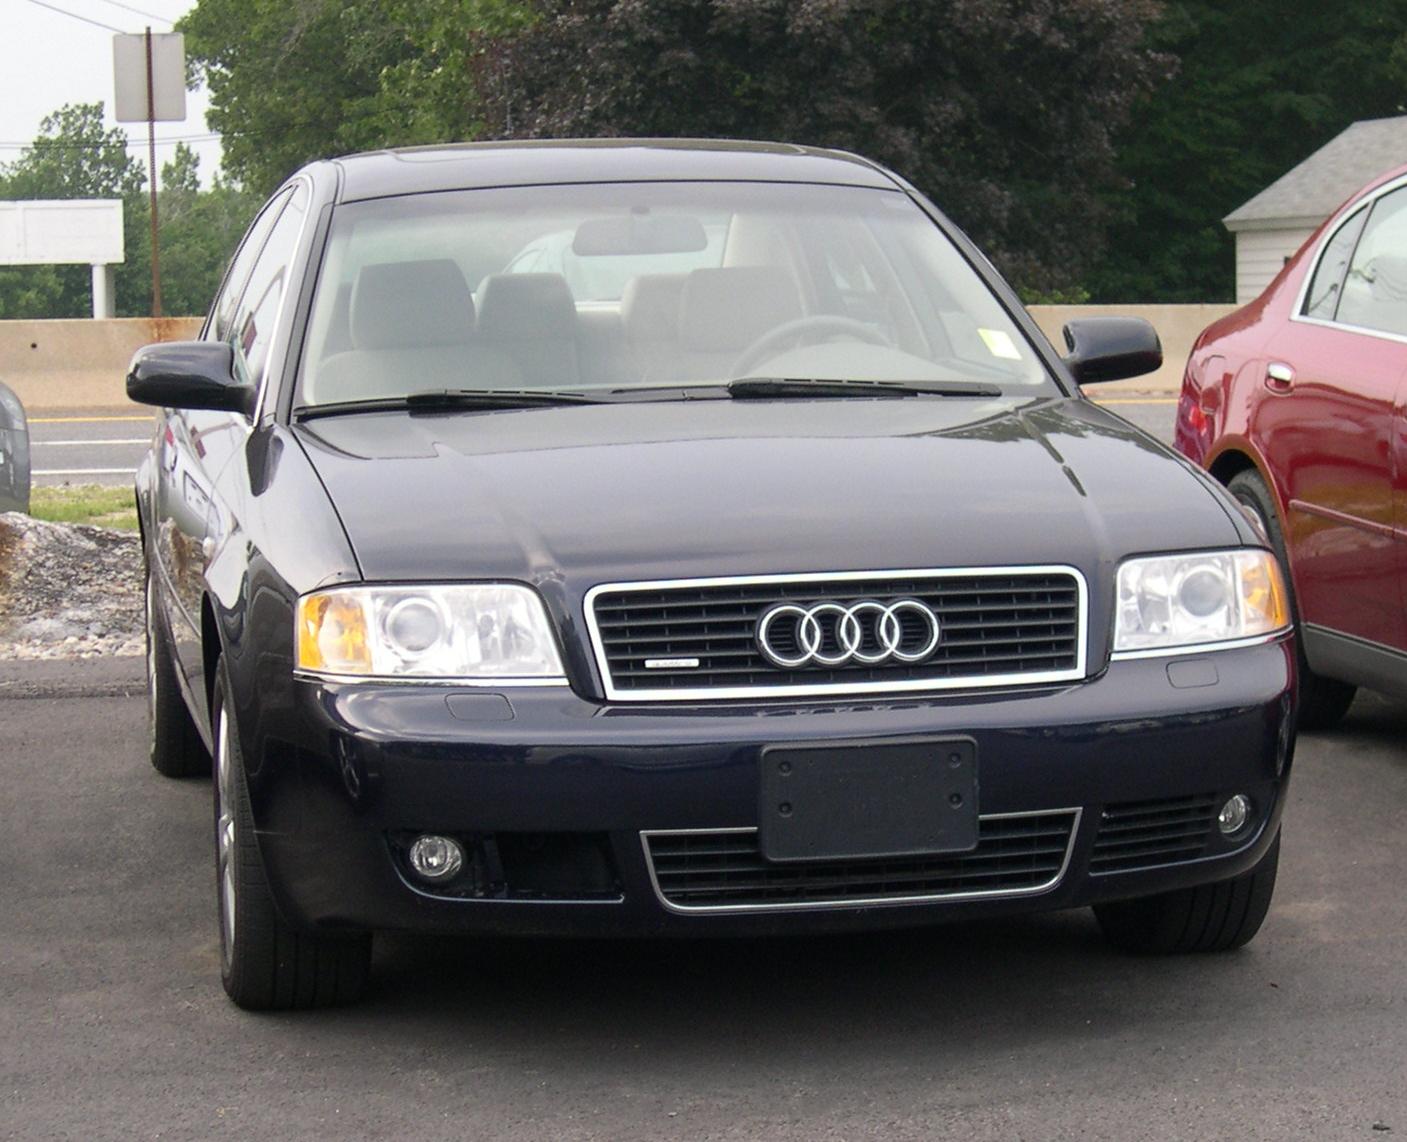 File:2004 Audi A6 Quattro.jpg - Wikipedia